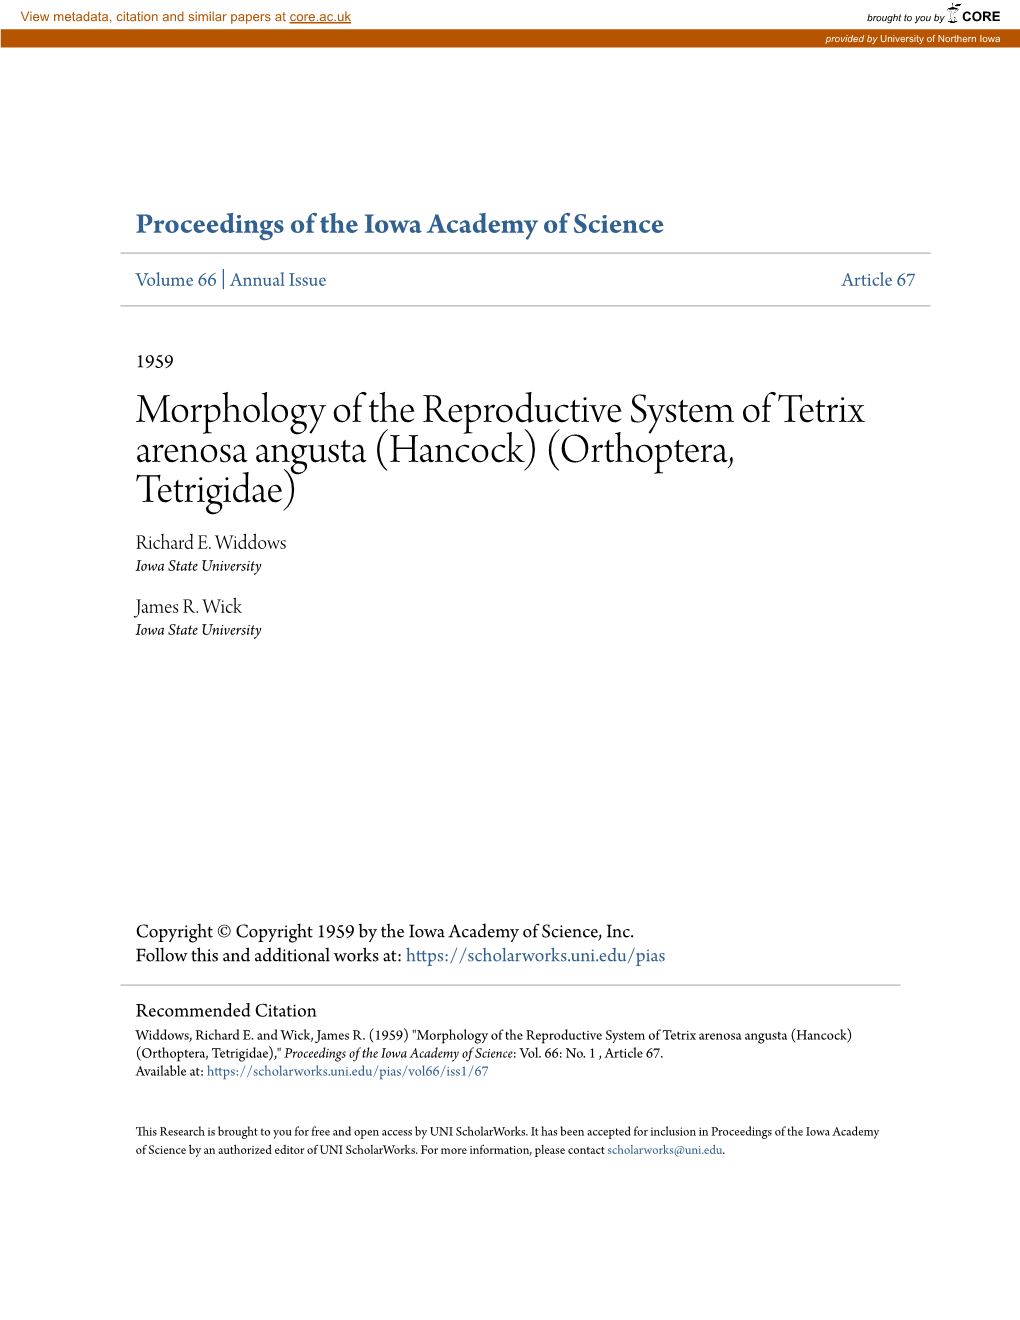 Morphology of the Reproductive System of Tetrix Arenosa Angusta (Hancock) (Orthoptera, Tetrigidae) Richard E